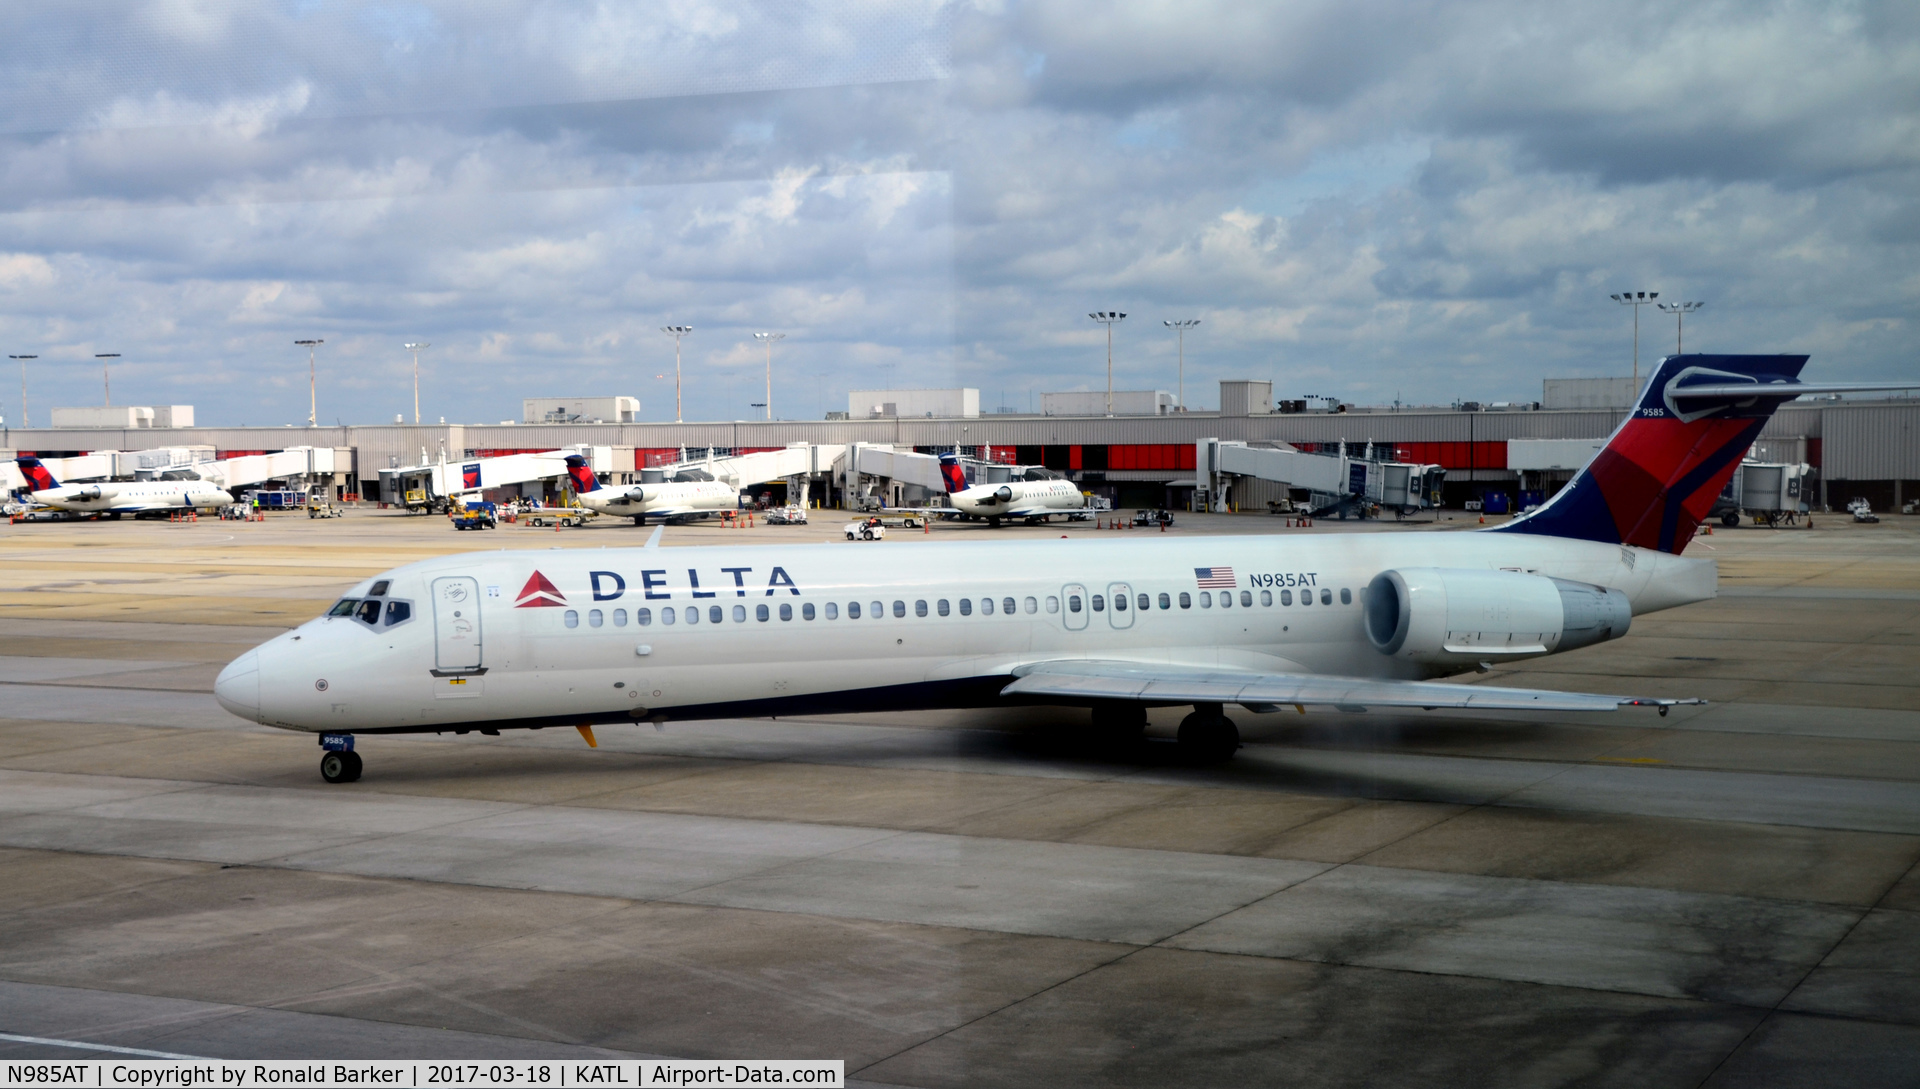 N985AT, 2001 Boeing 717-200 C/N 55090, Taxi for takeoff Atlanta